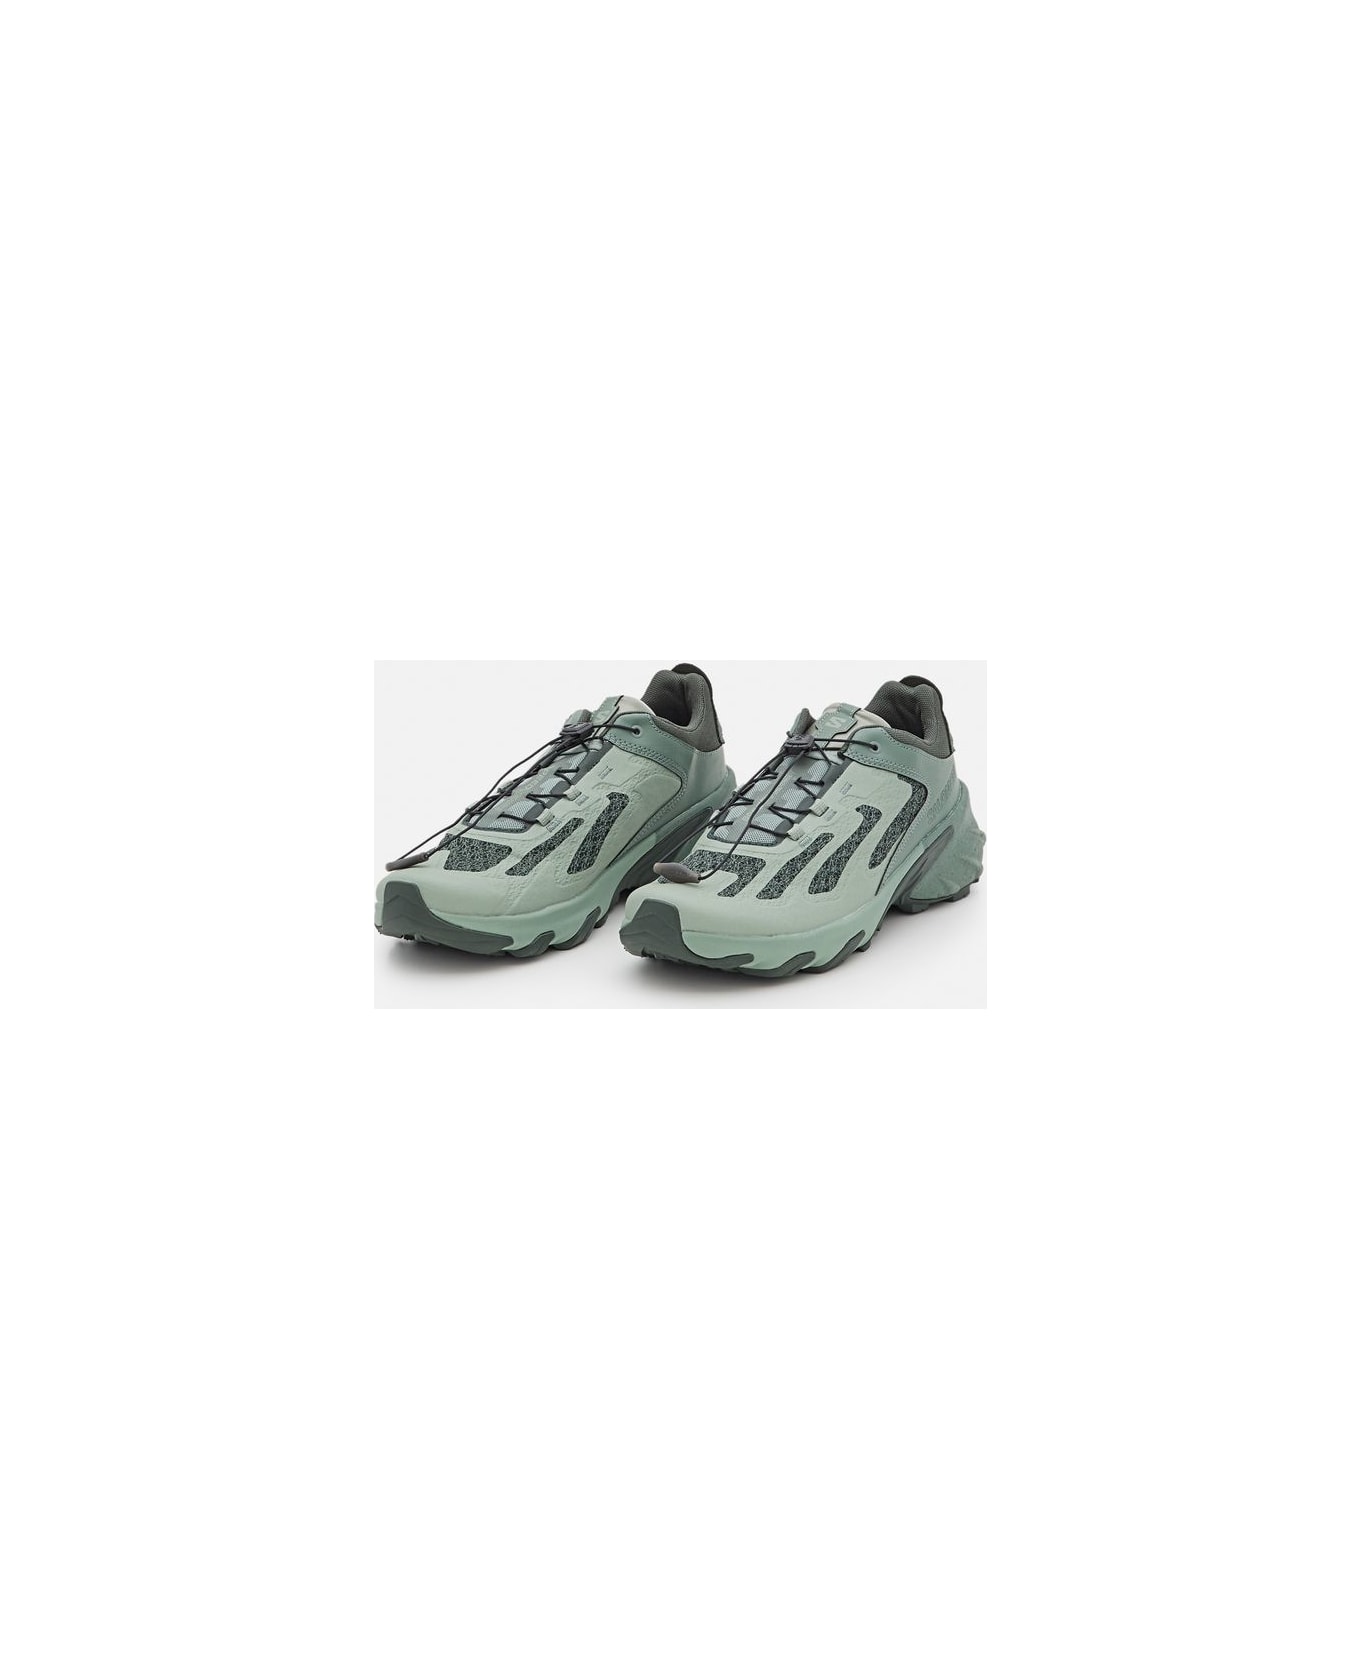 Salomon Speedverse Prg Sneakers - Green スニーカー